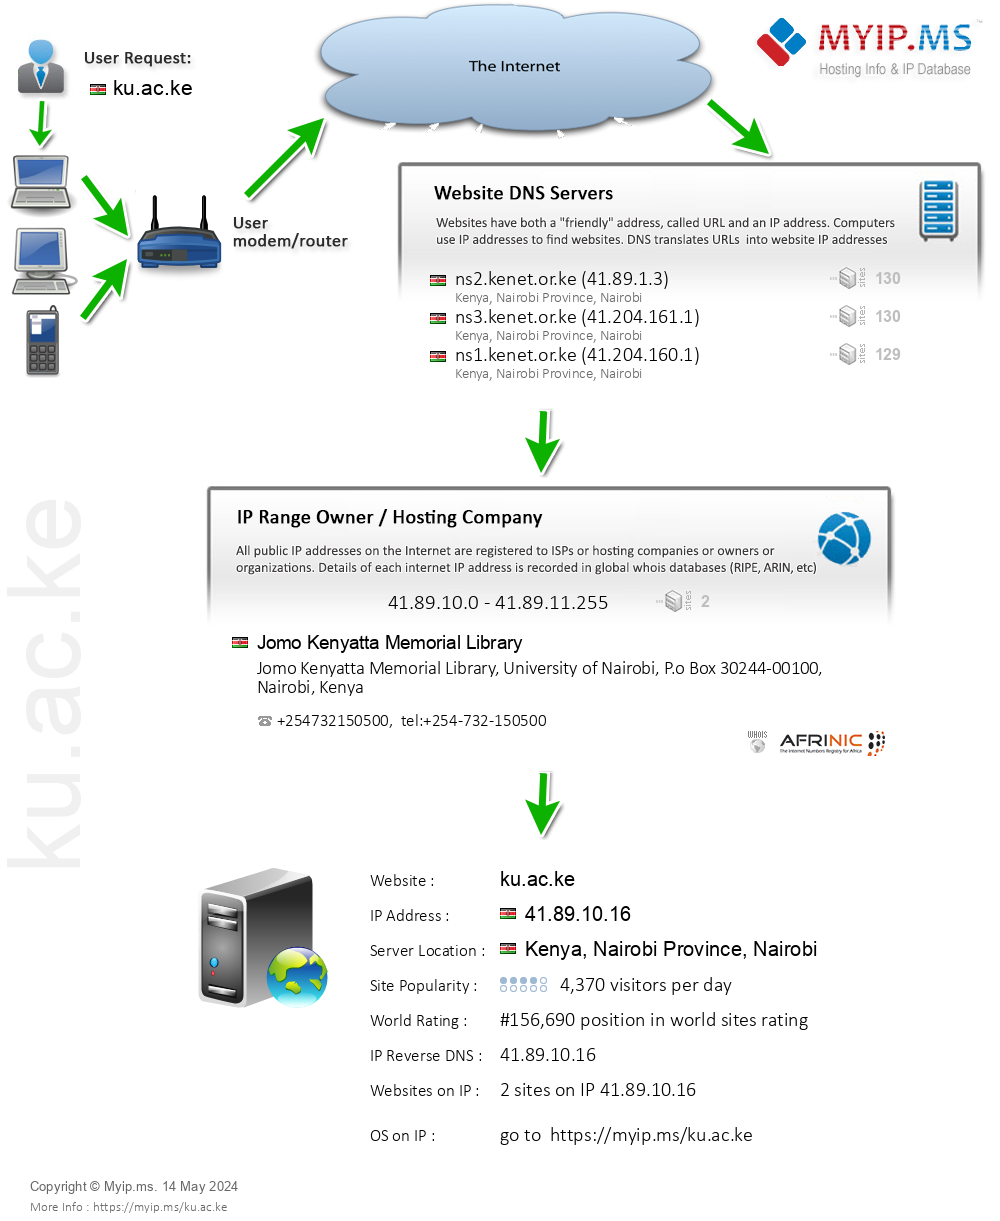 Ku.ac.ke - Website Hosting Visual IP Diagram